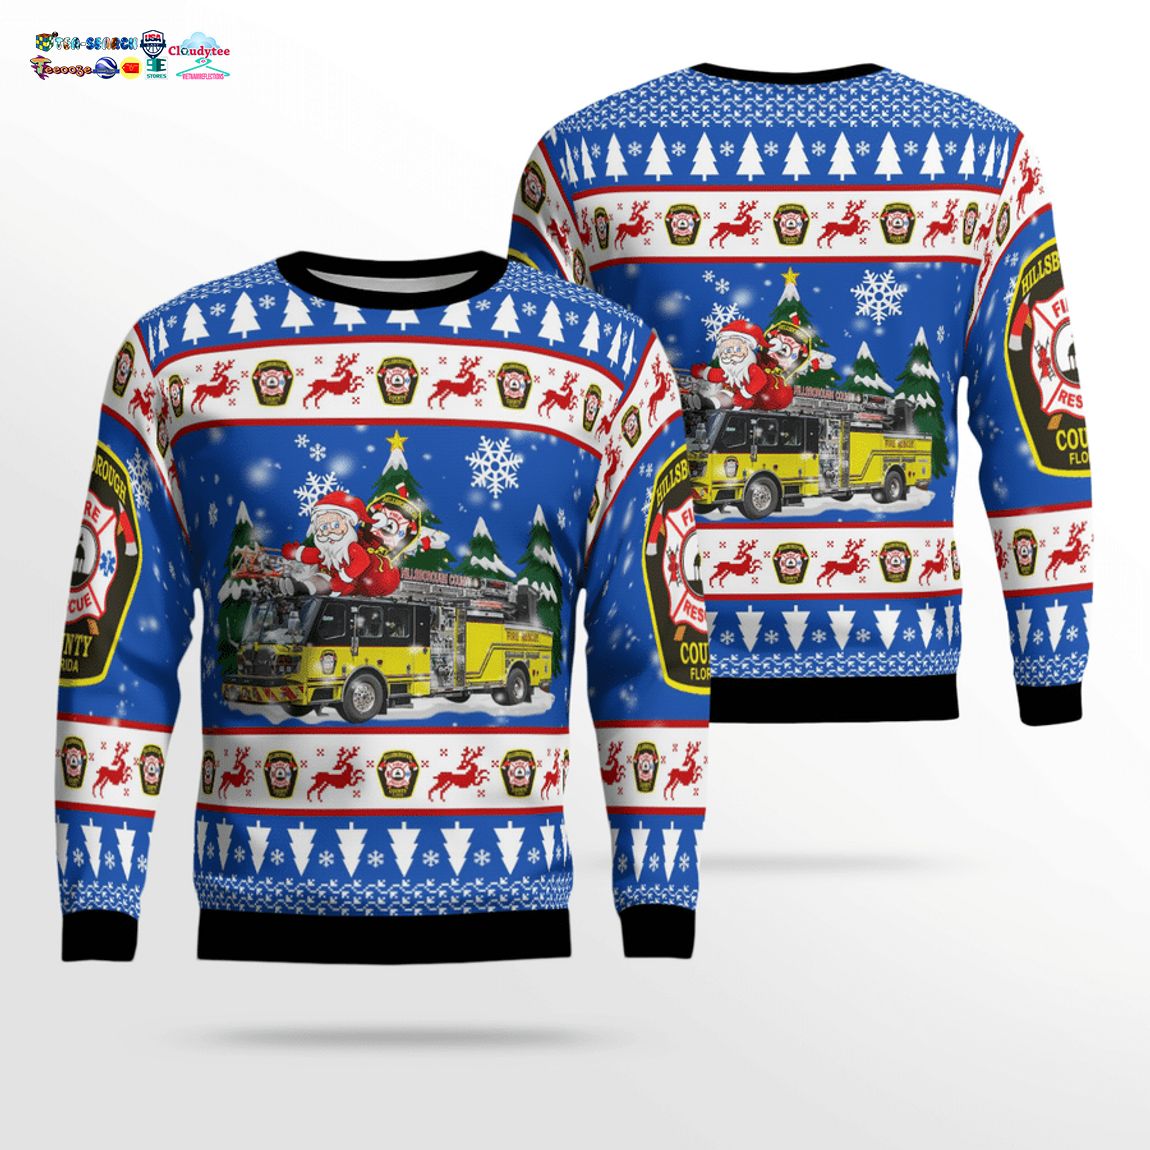 Hillsborough County Fire Department 3D Christmas Sweater